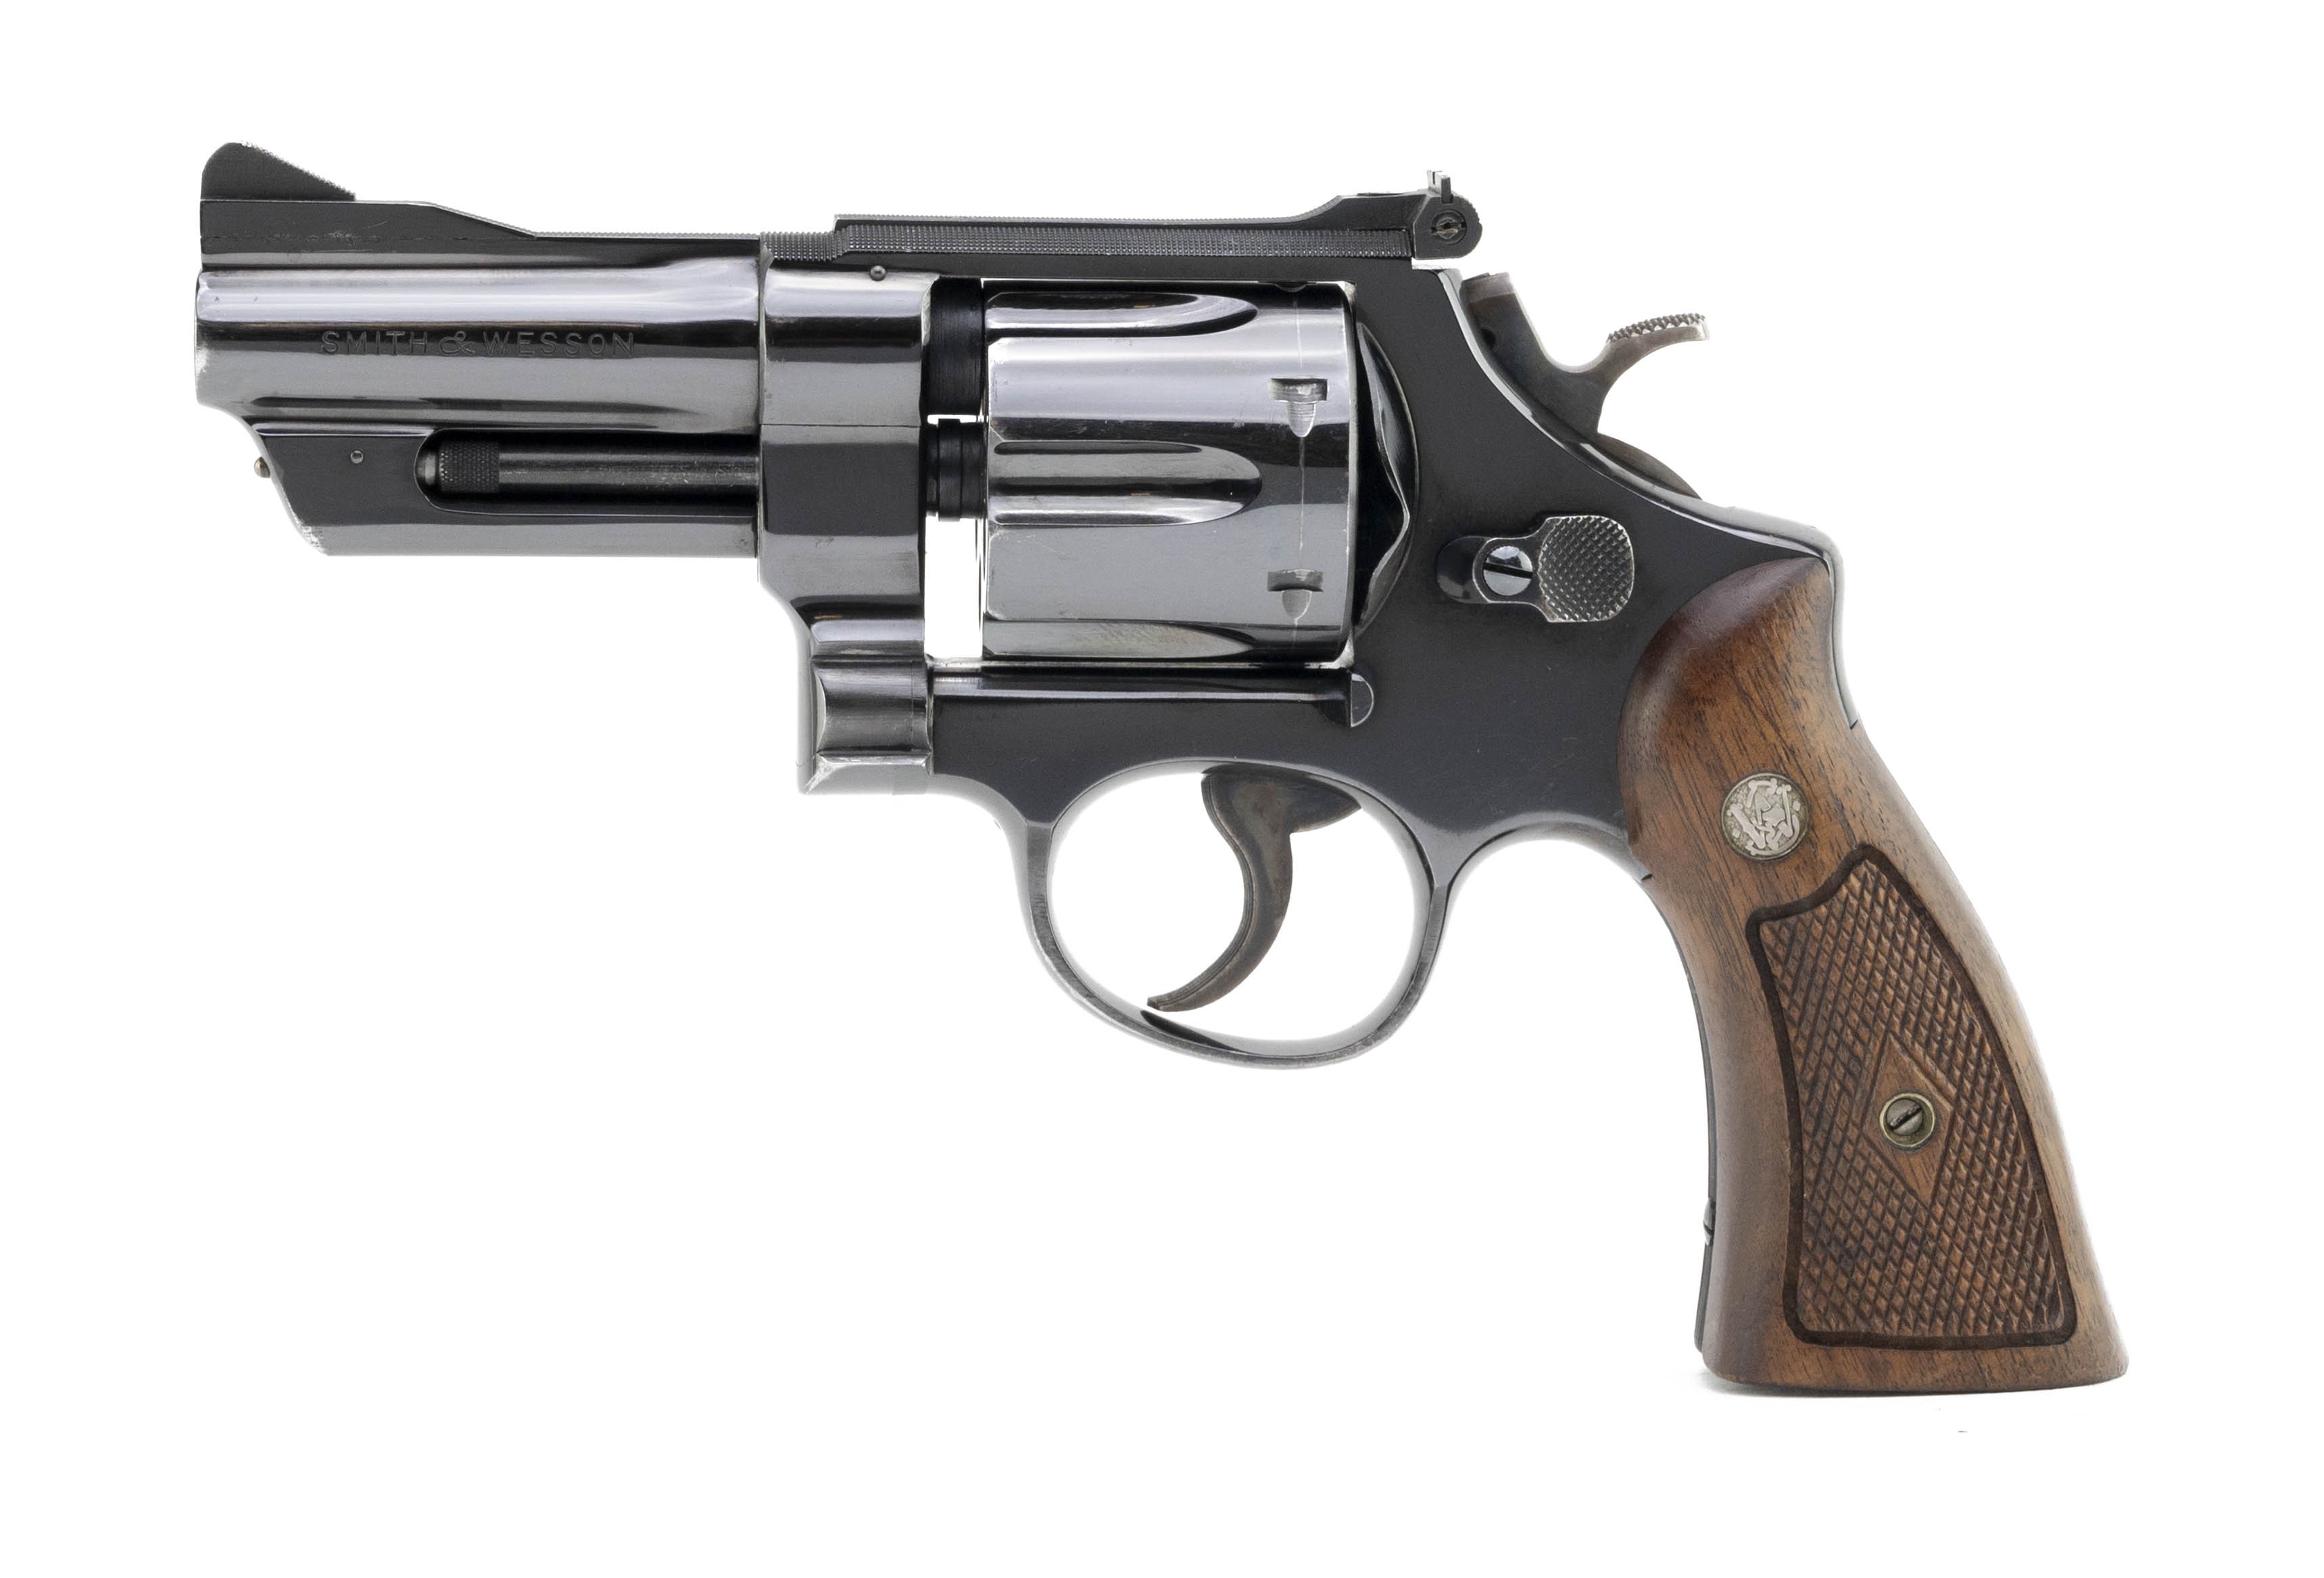 Smith & Wesson Pre-27 .357 Magnum caliber revolver for sale.